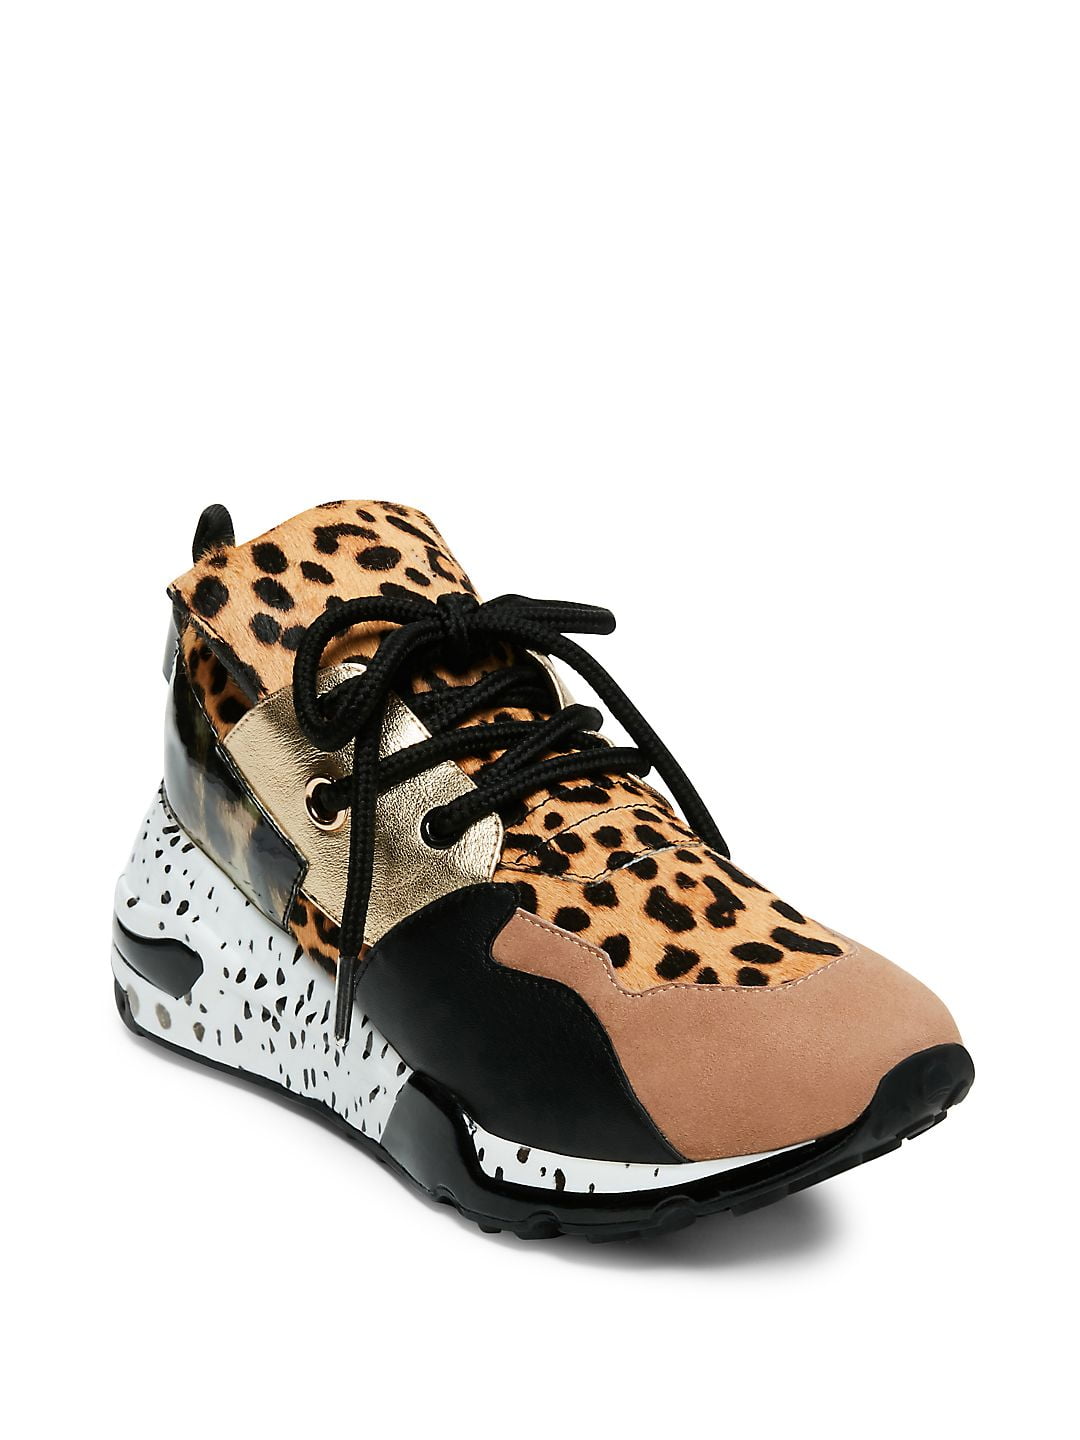 Descifrar amanecer Mucho Steve Madden Women's Cliff Leather Leopard Print Lace-Up Sneaker -  Walmart.com